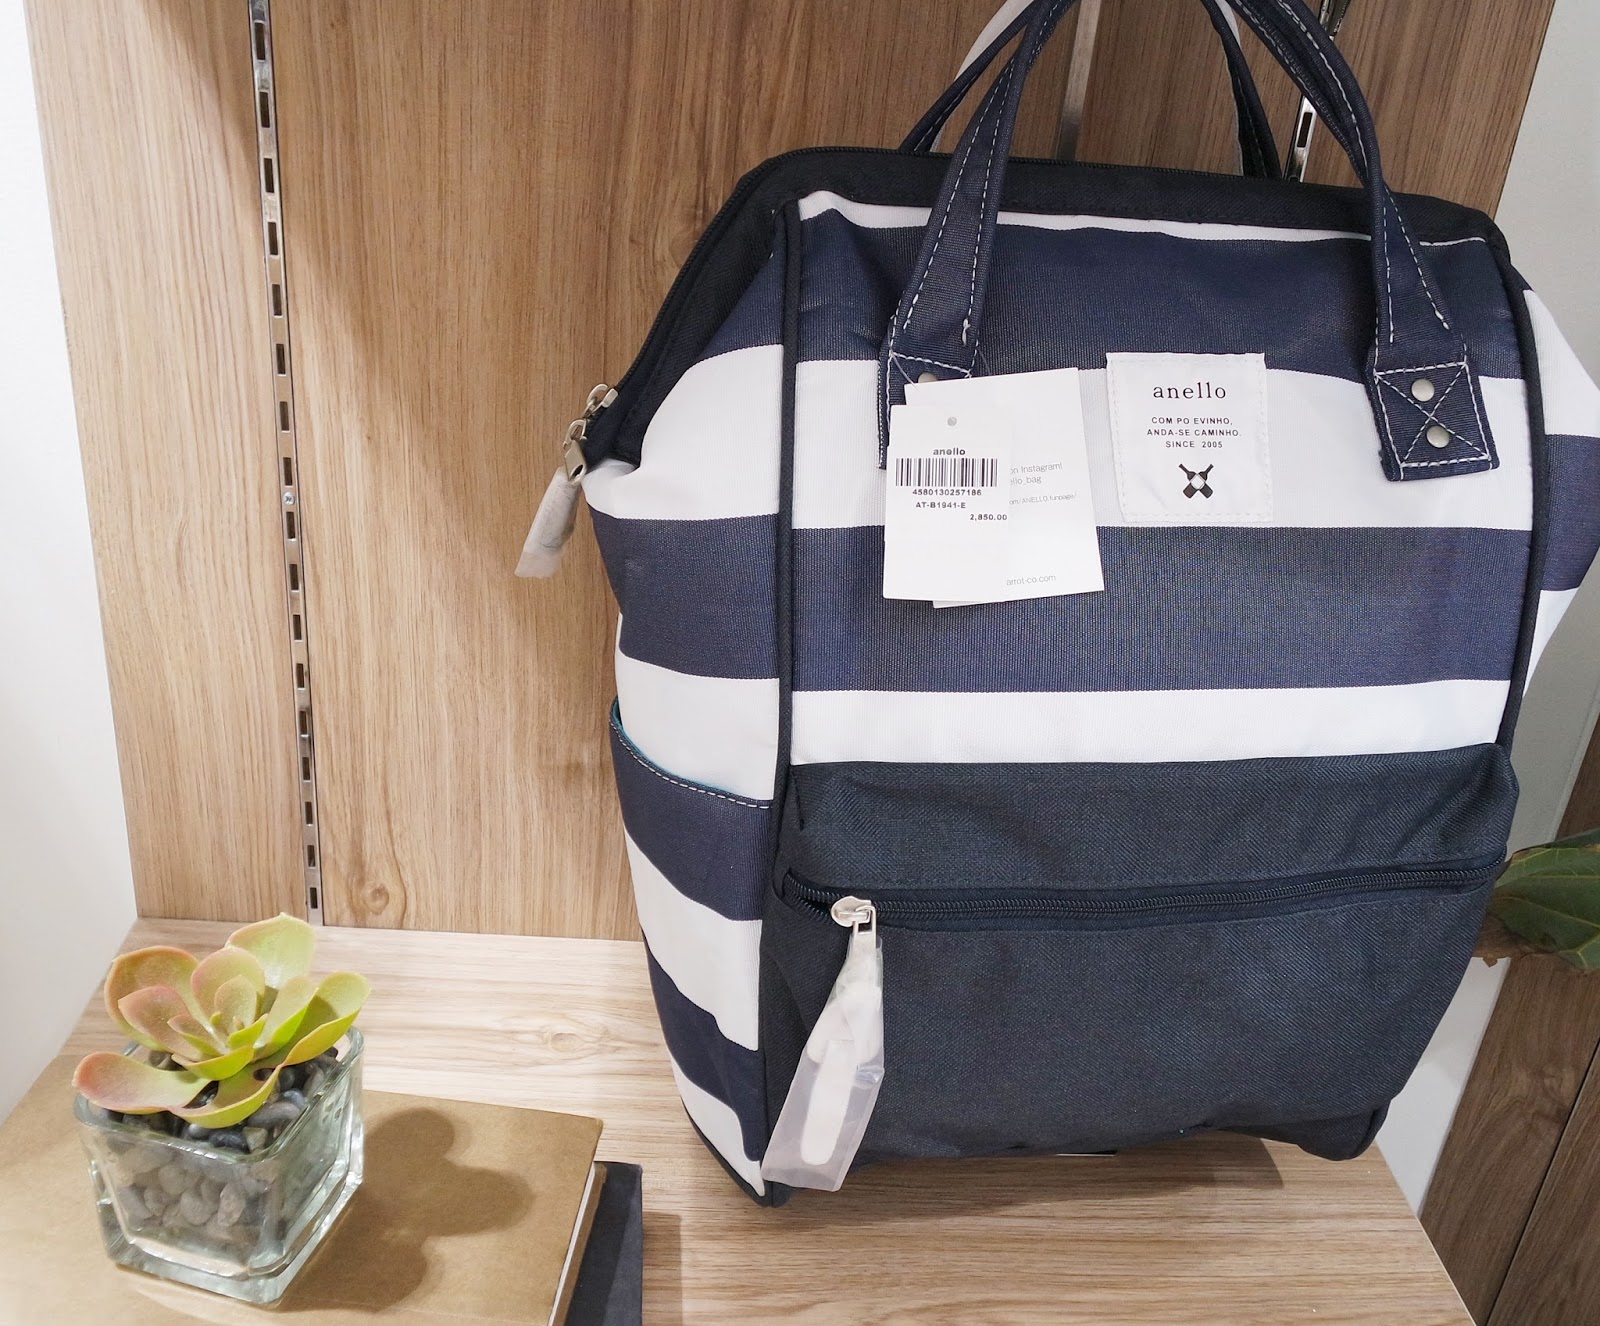 Anello Bag Review, Estancia Flagship Branch + Authentic Bag Photos